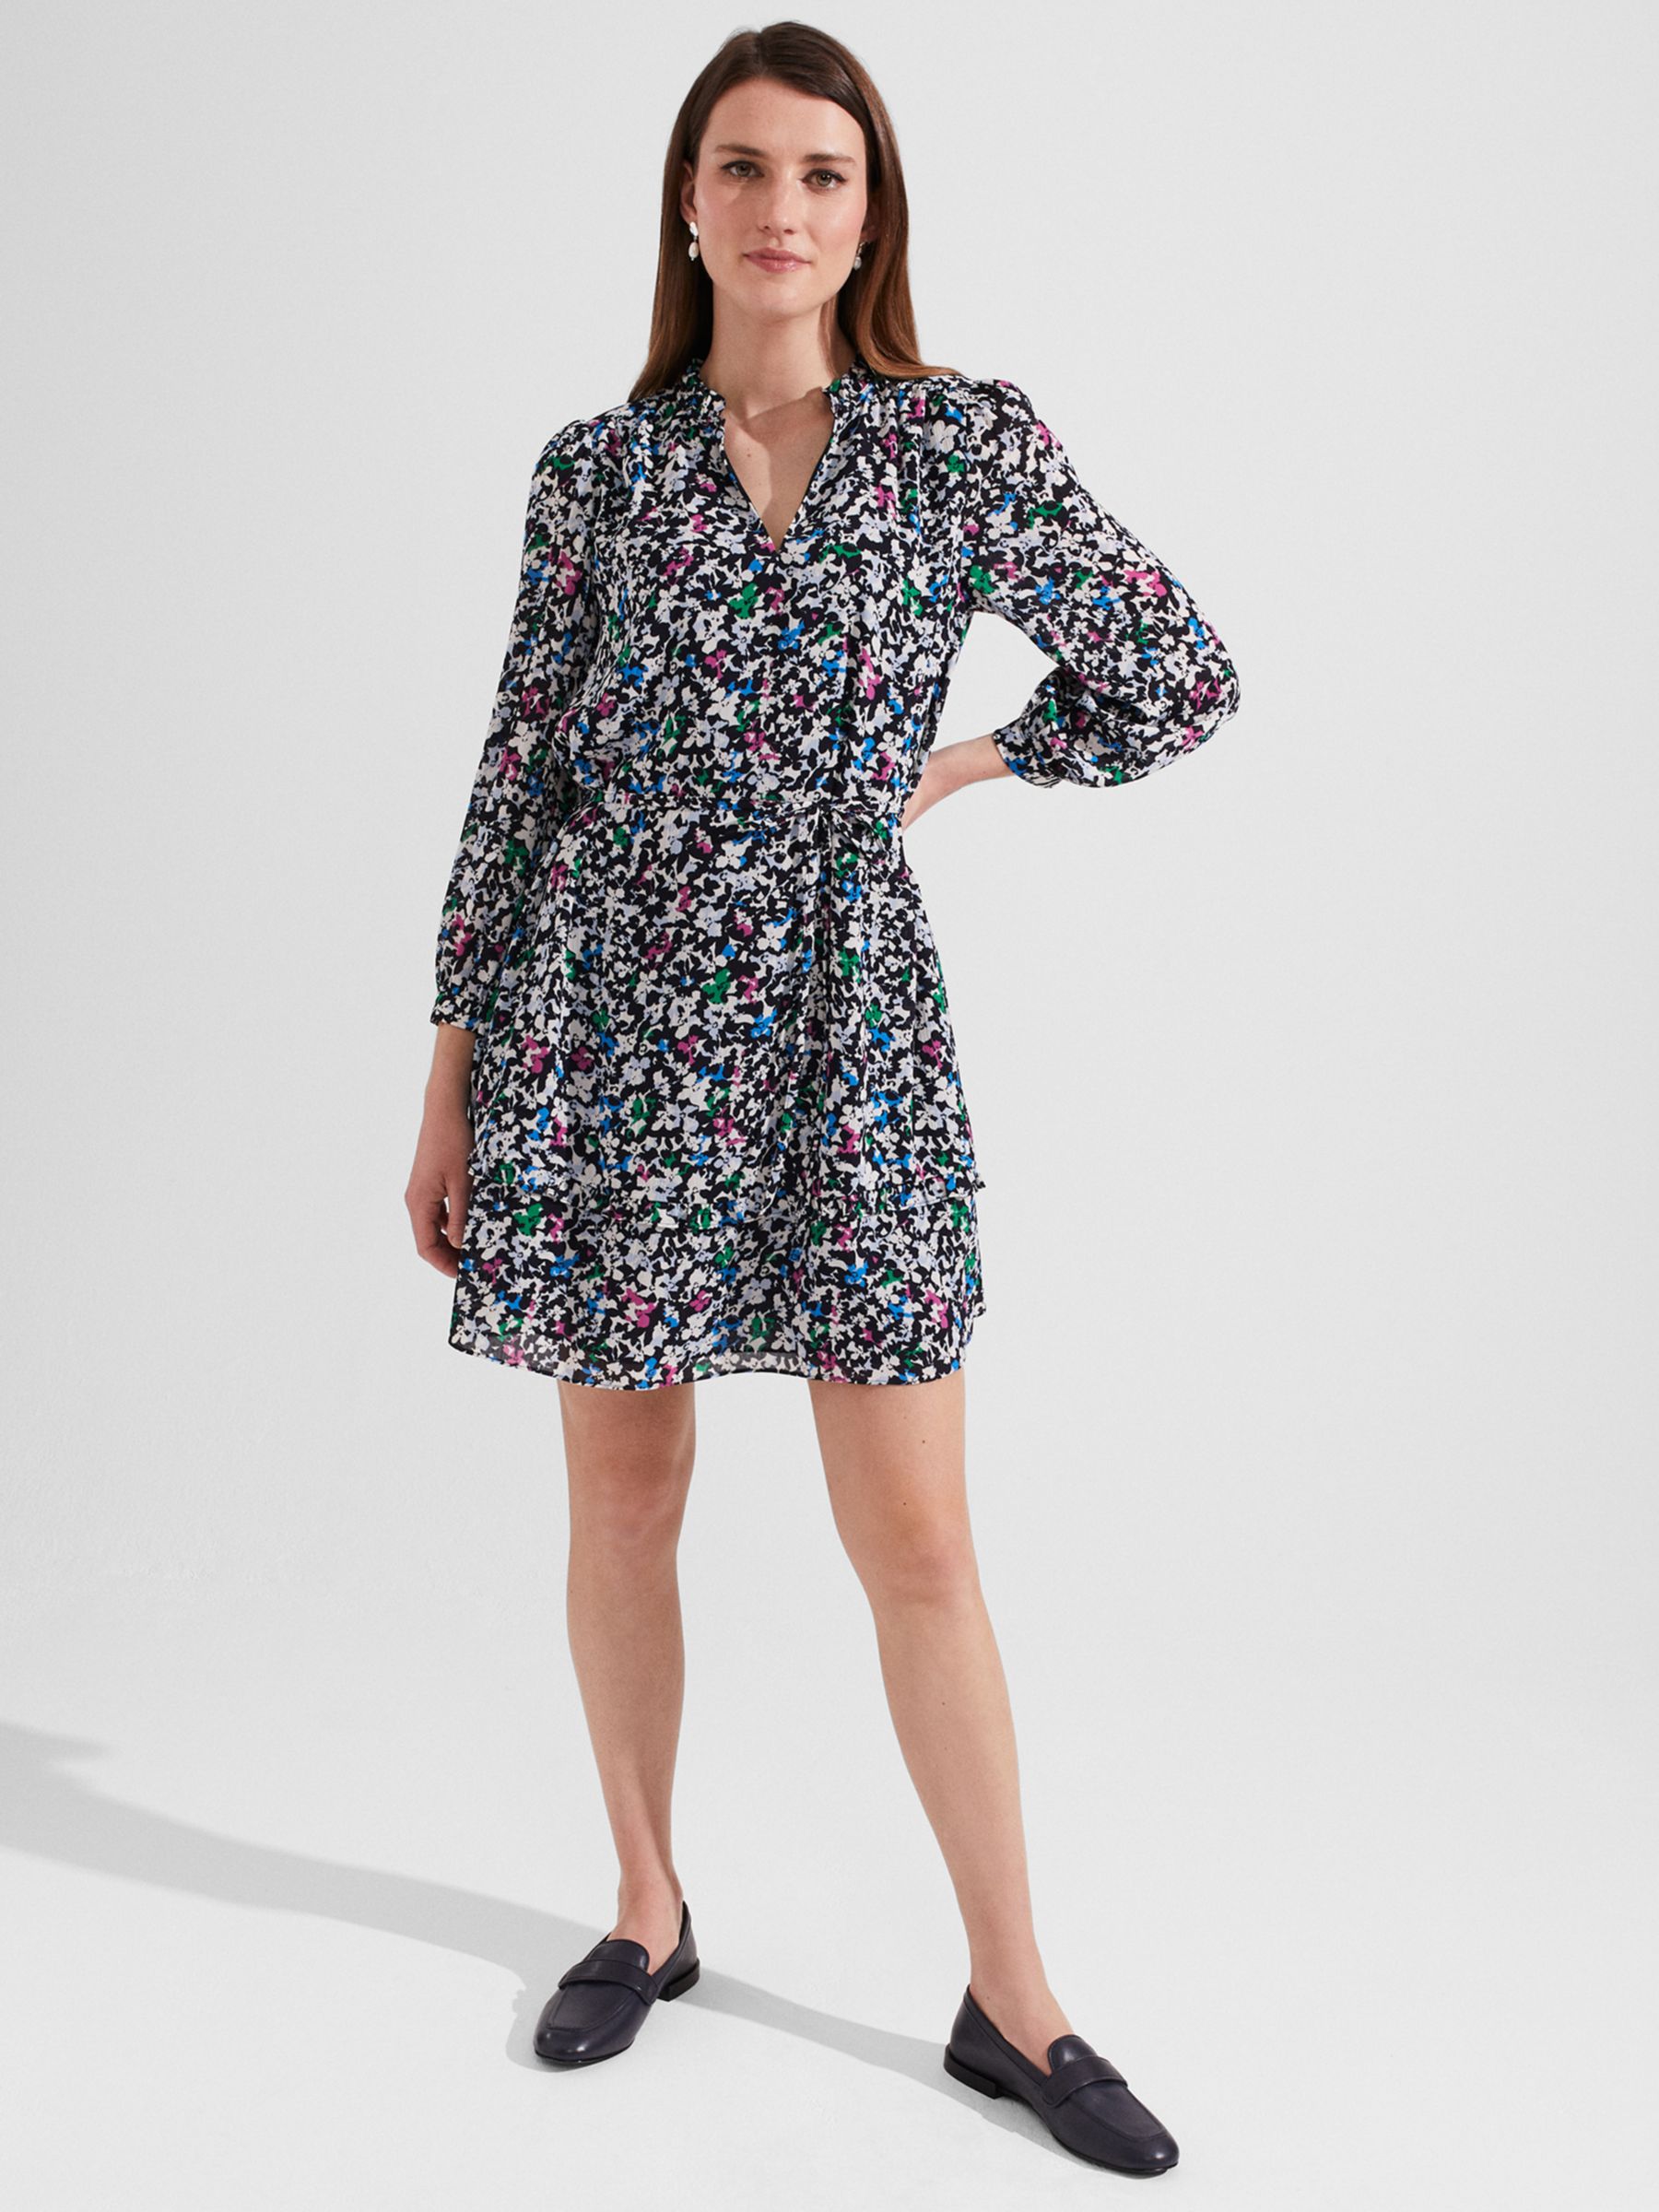 Hobbs Selina Abstract Print Mini Dress, Navy/Multi at John Lewis & Partners